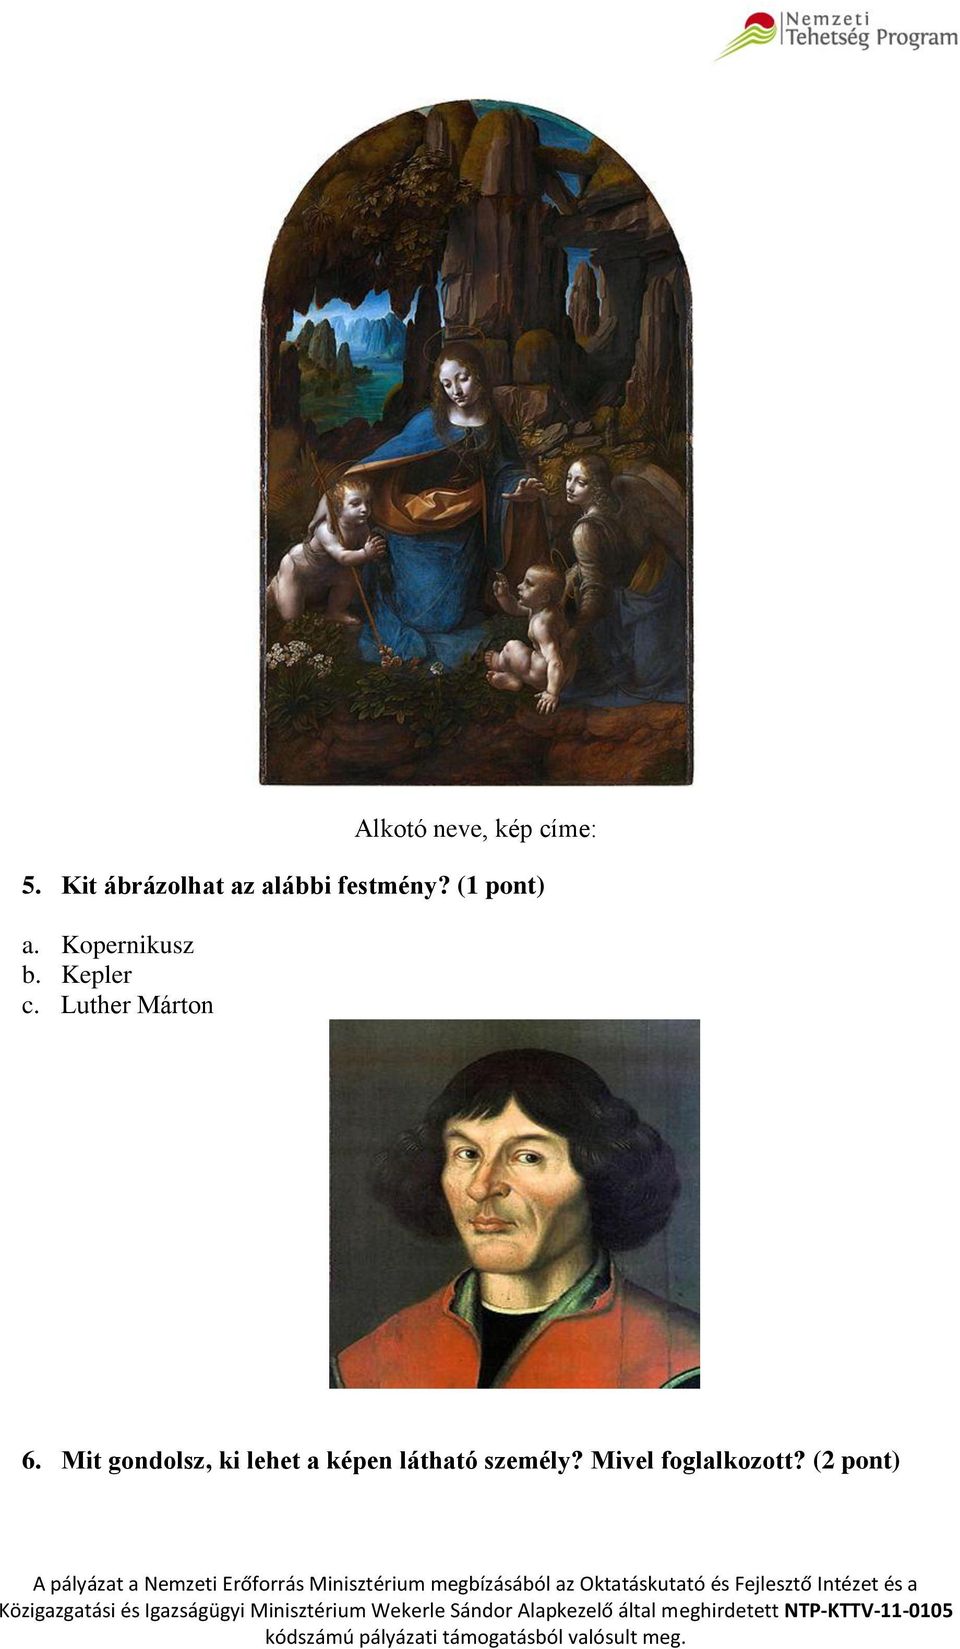 Kopernikusz b. Kepler c. Luther Márton 6.